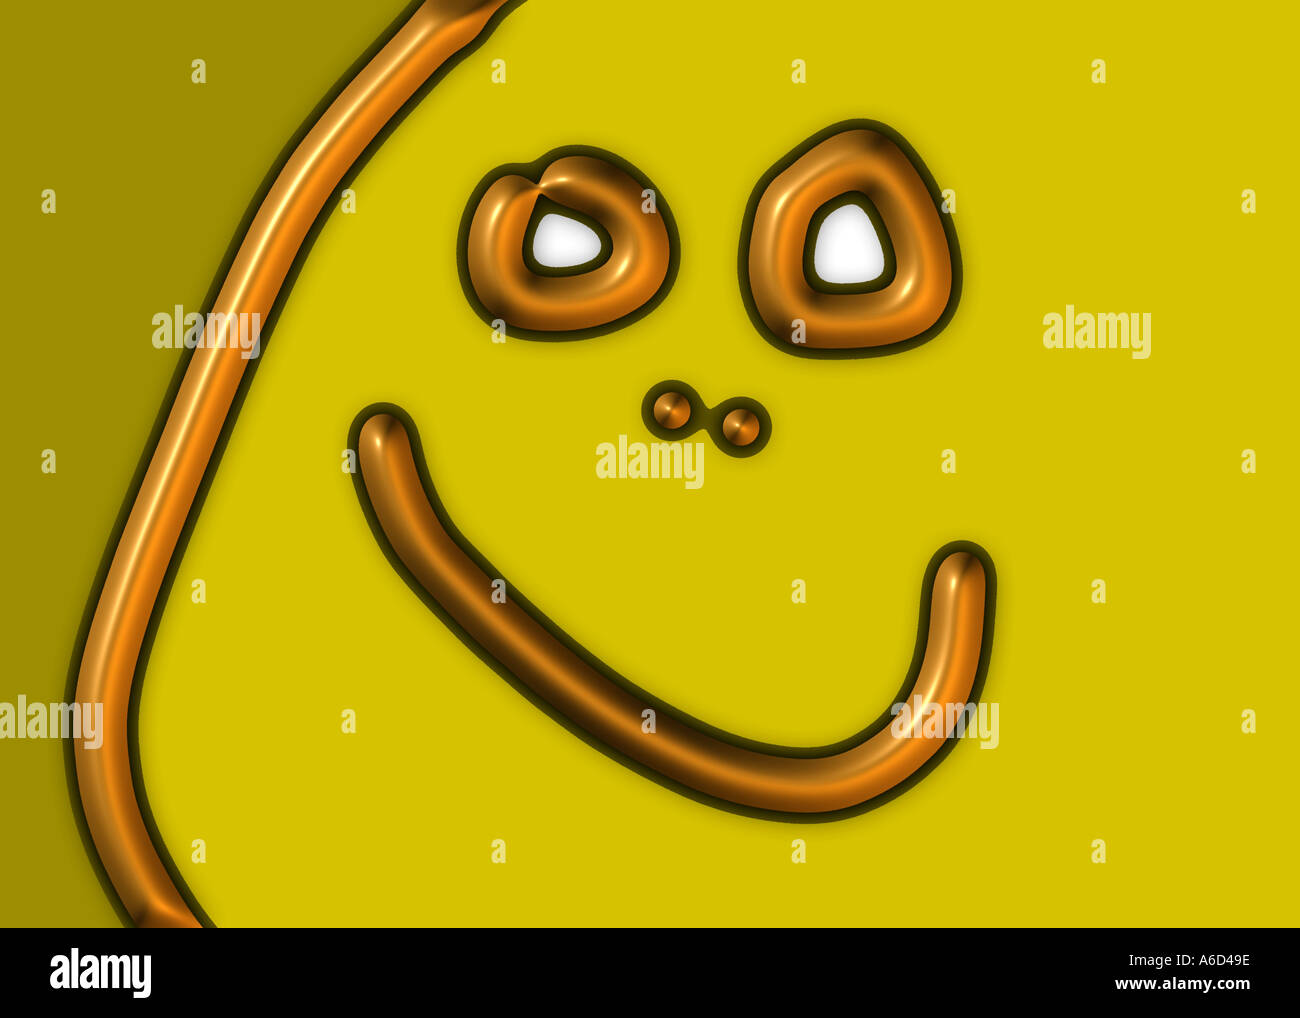 Smile cartoon face Stock Photo